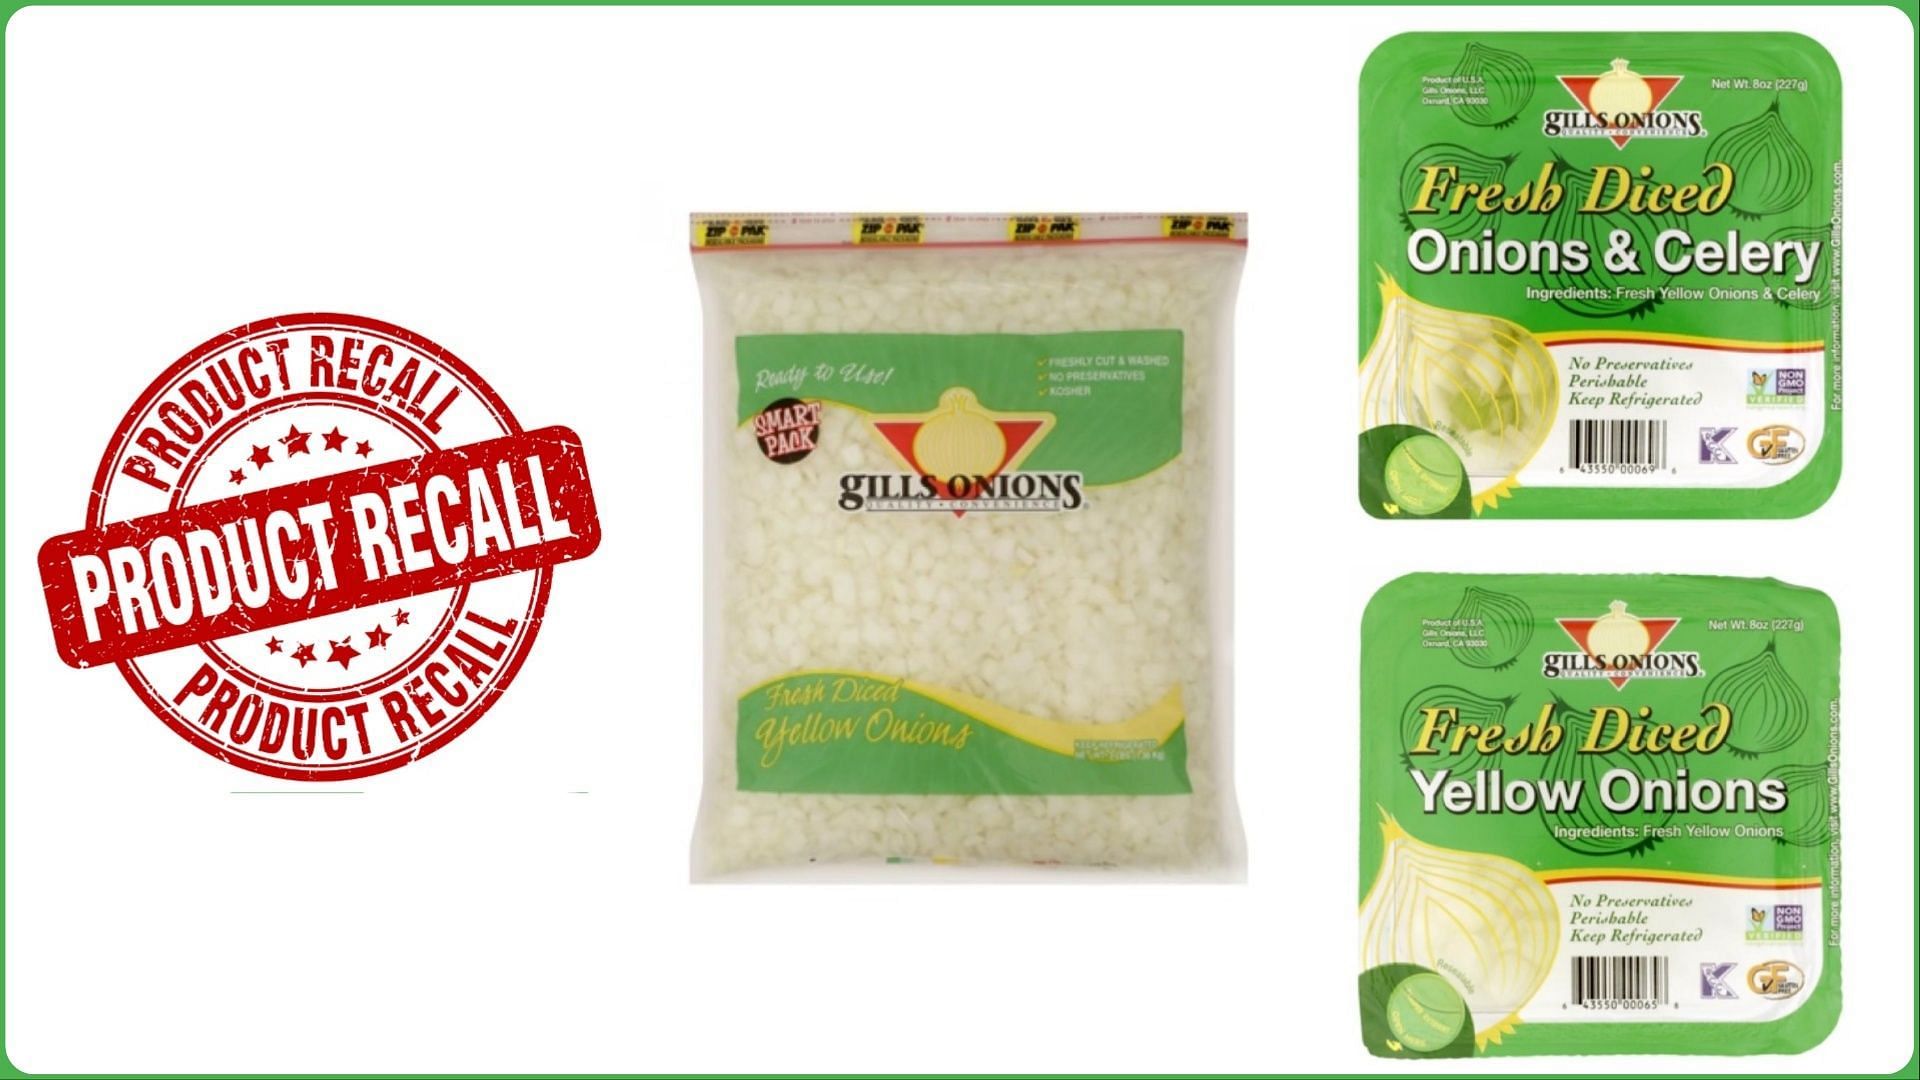 Gills Onions recalls select varieties of diced onions over salmonella contamination concerns (Image via FDA)